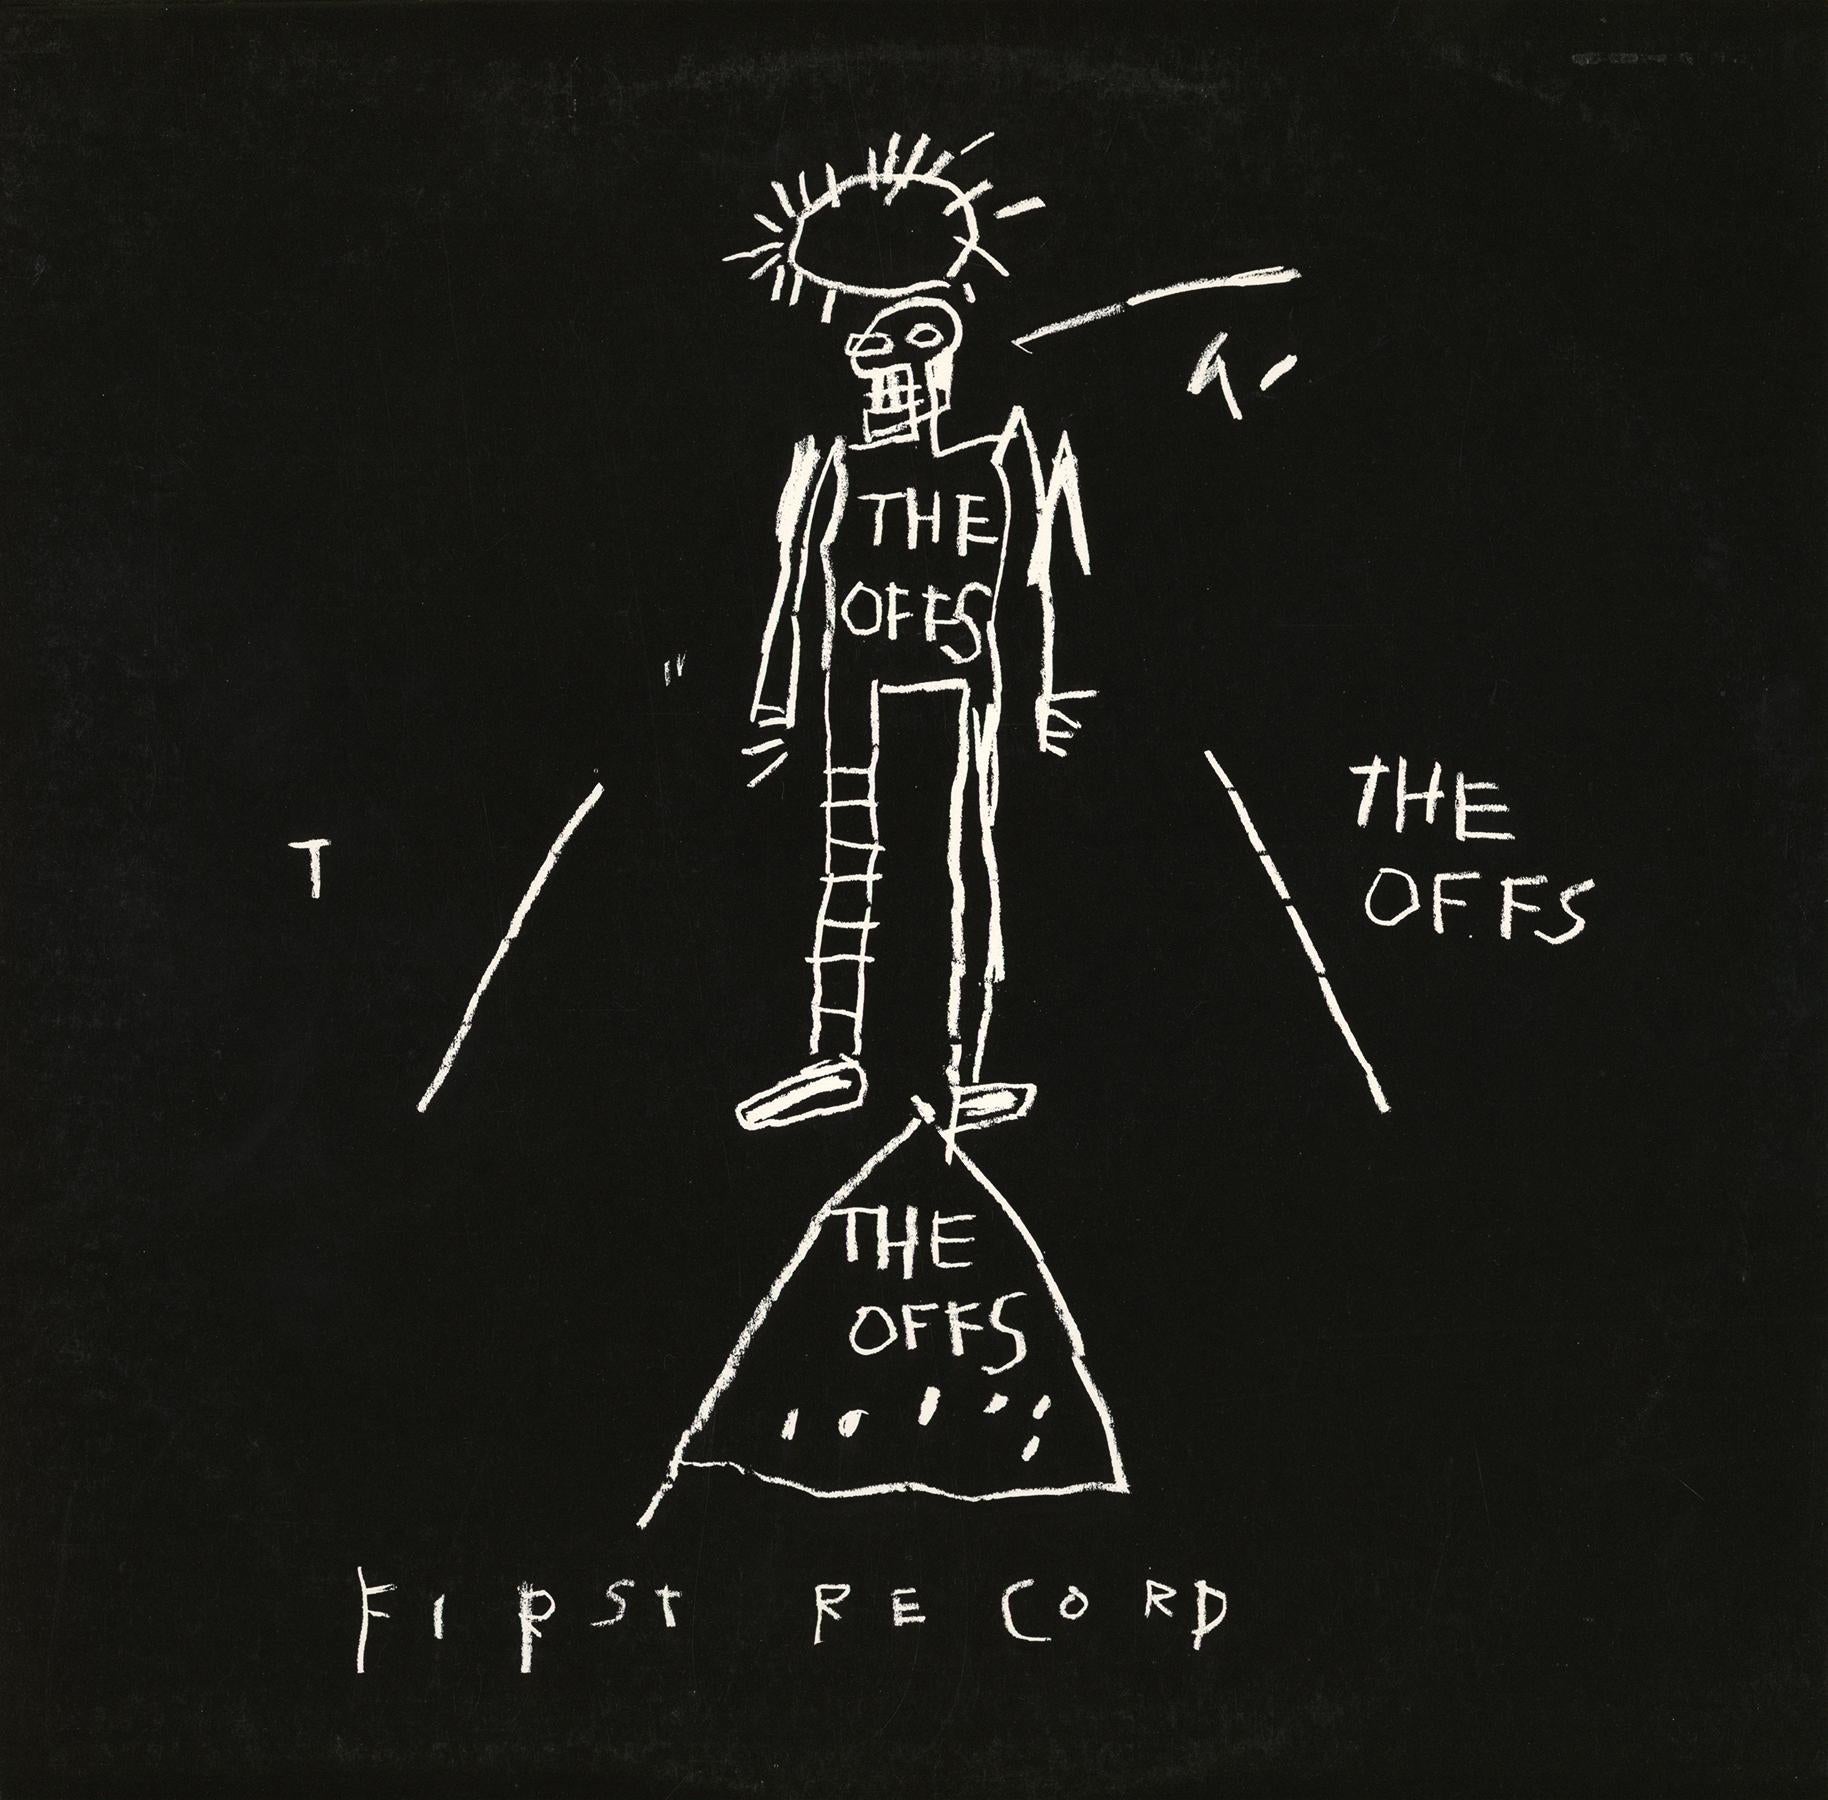 Basquiat The Offs 1984  - Pop Art Print by Jean-Michel Basquiat